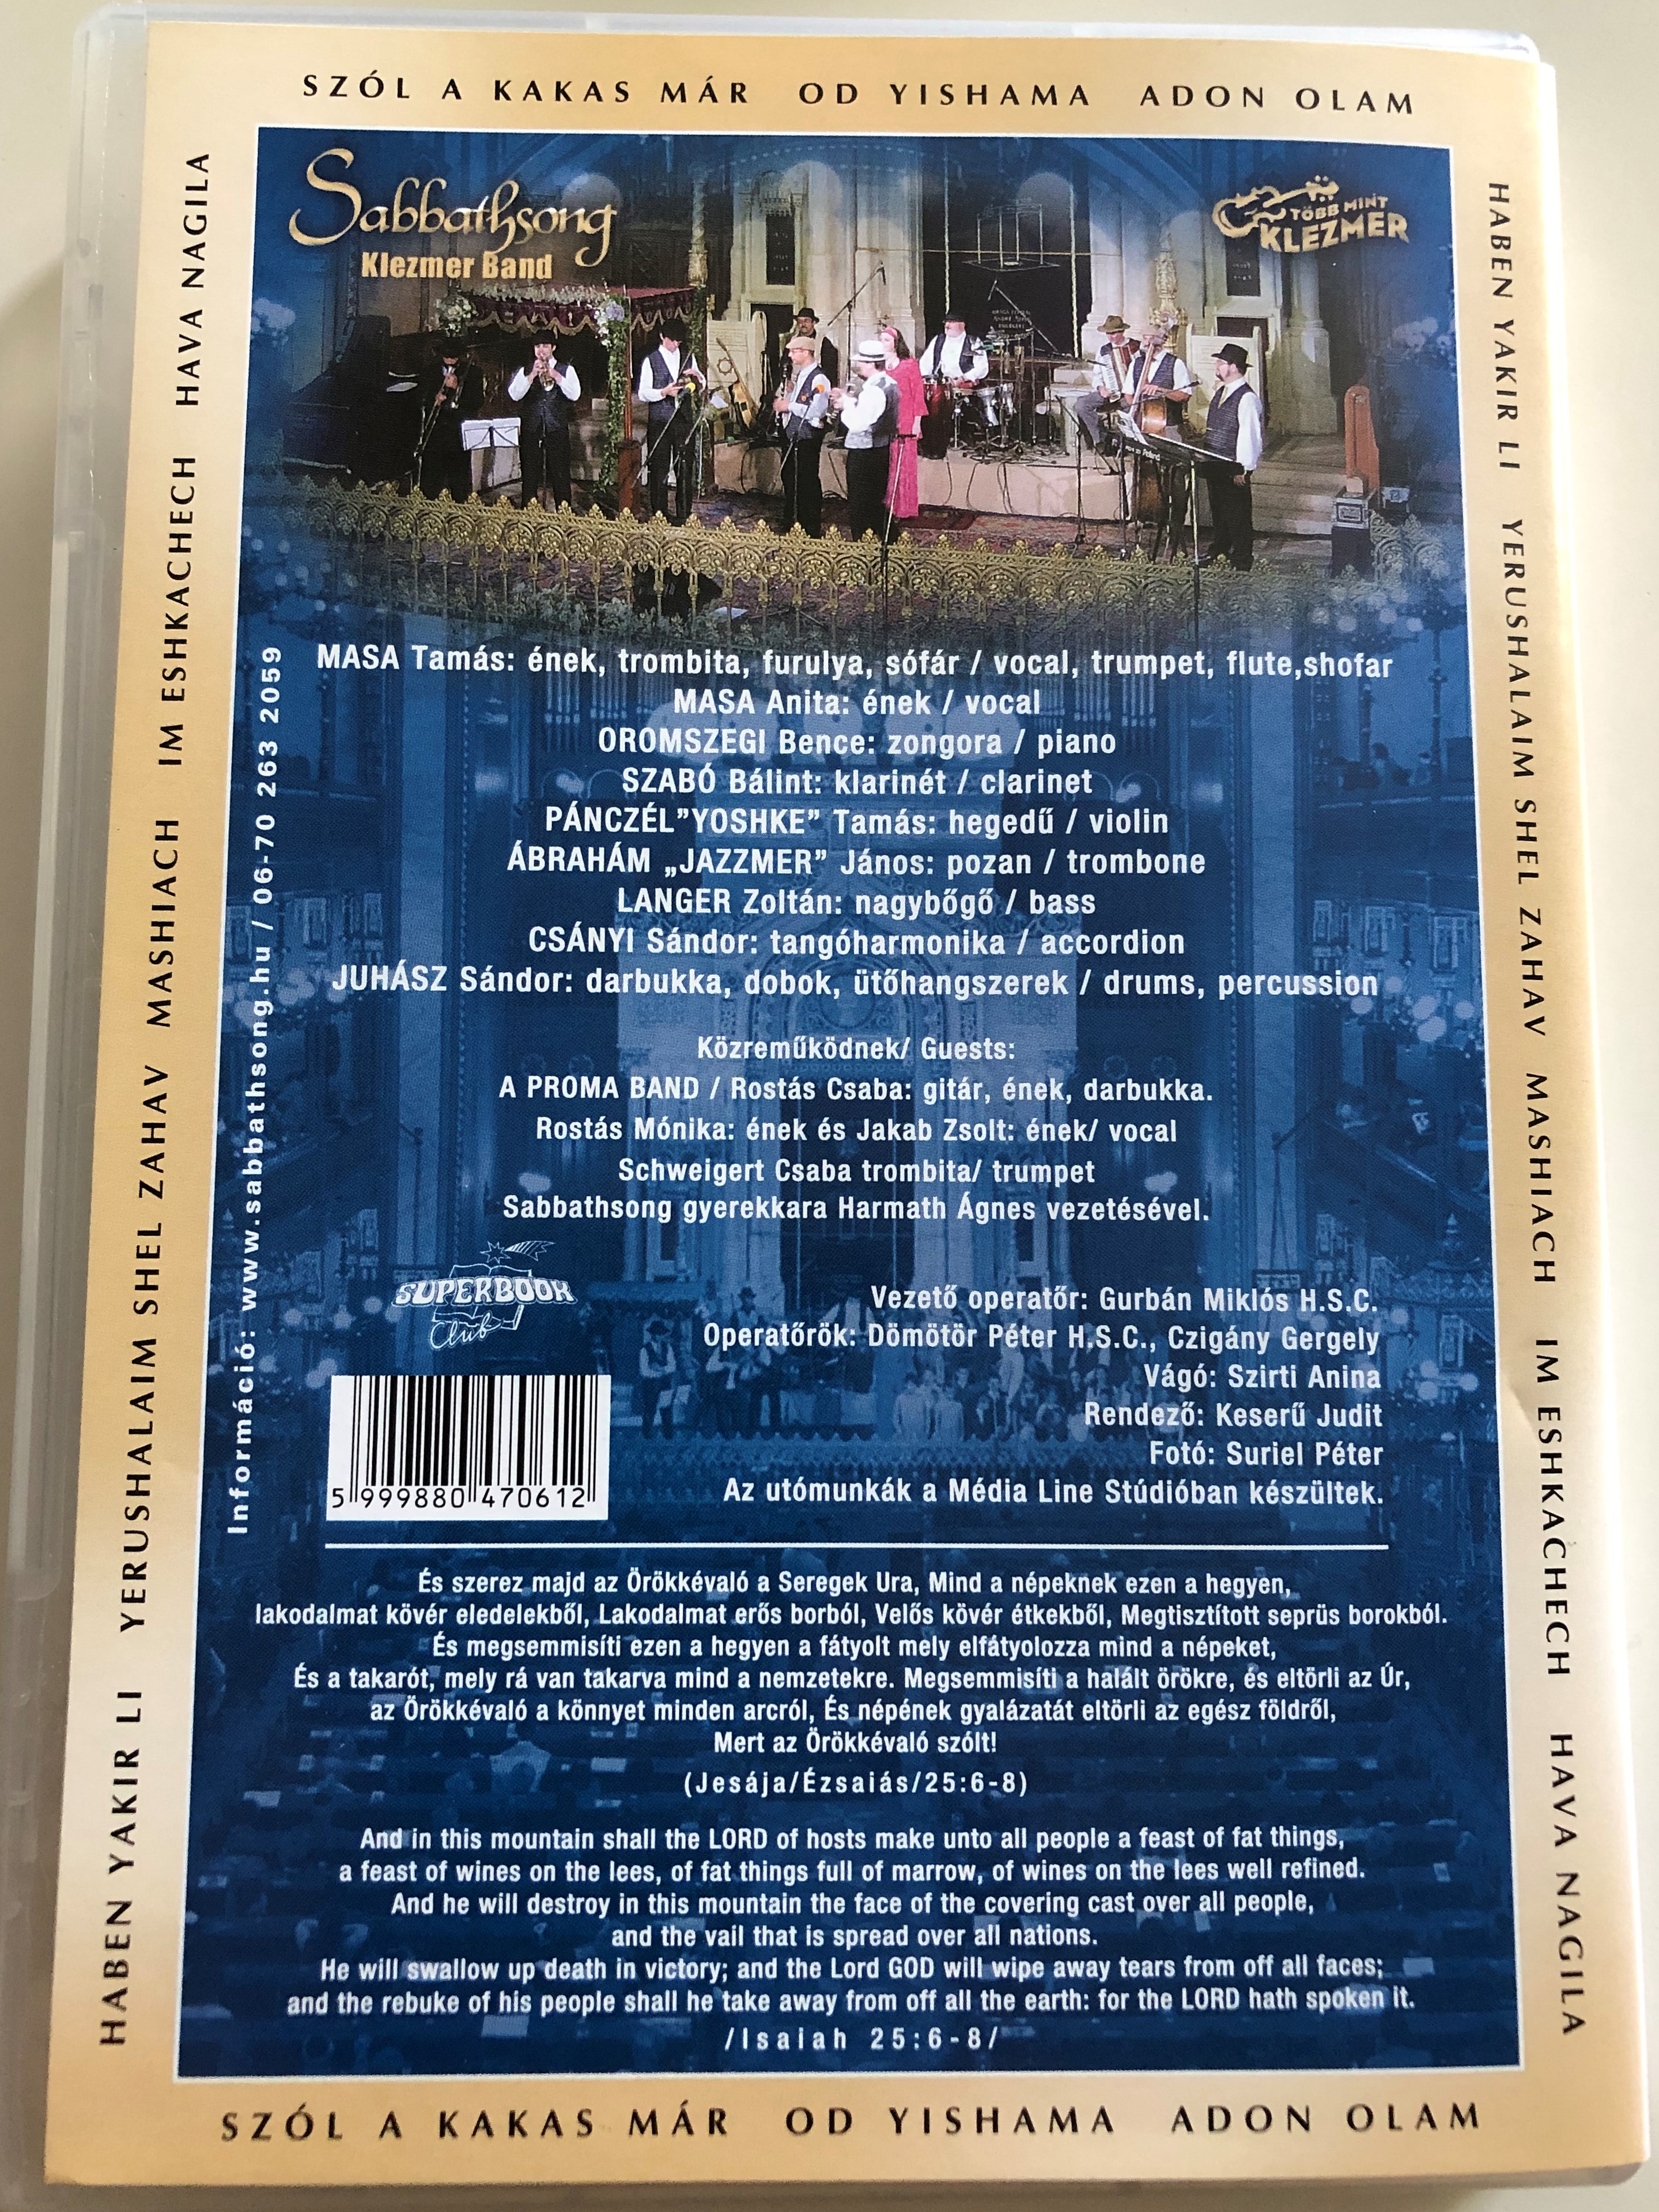 sabbathsong-klezmer-band-menyegz-a-cionon-dvd-2004-chatuan-al-har-tzion-wedding-on-mount-zion-concert-in-synagogue-t-bb-mint-klezmer-concert-video-3-.jpg